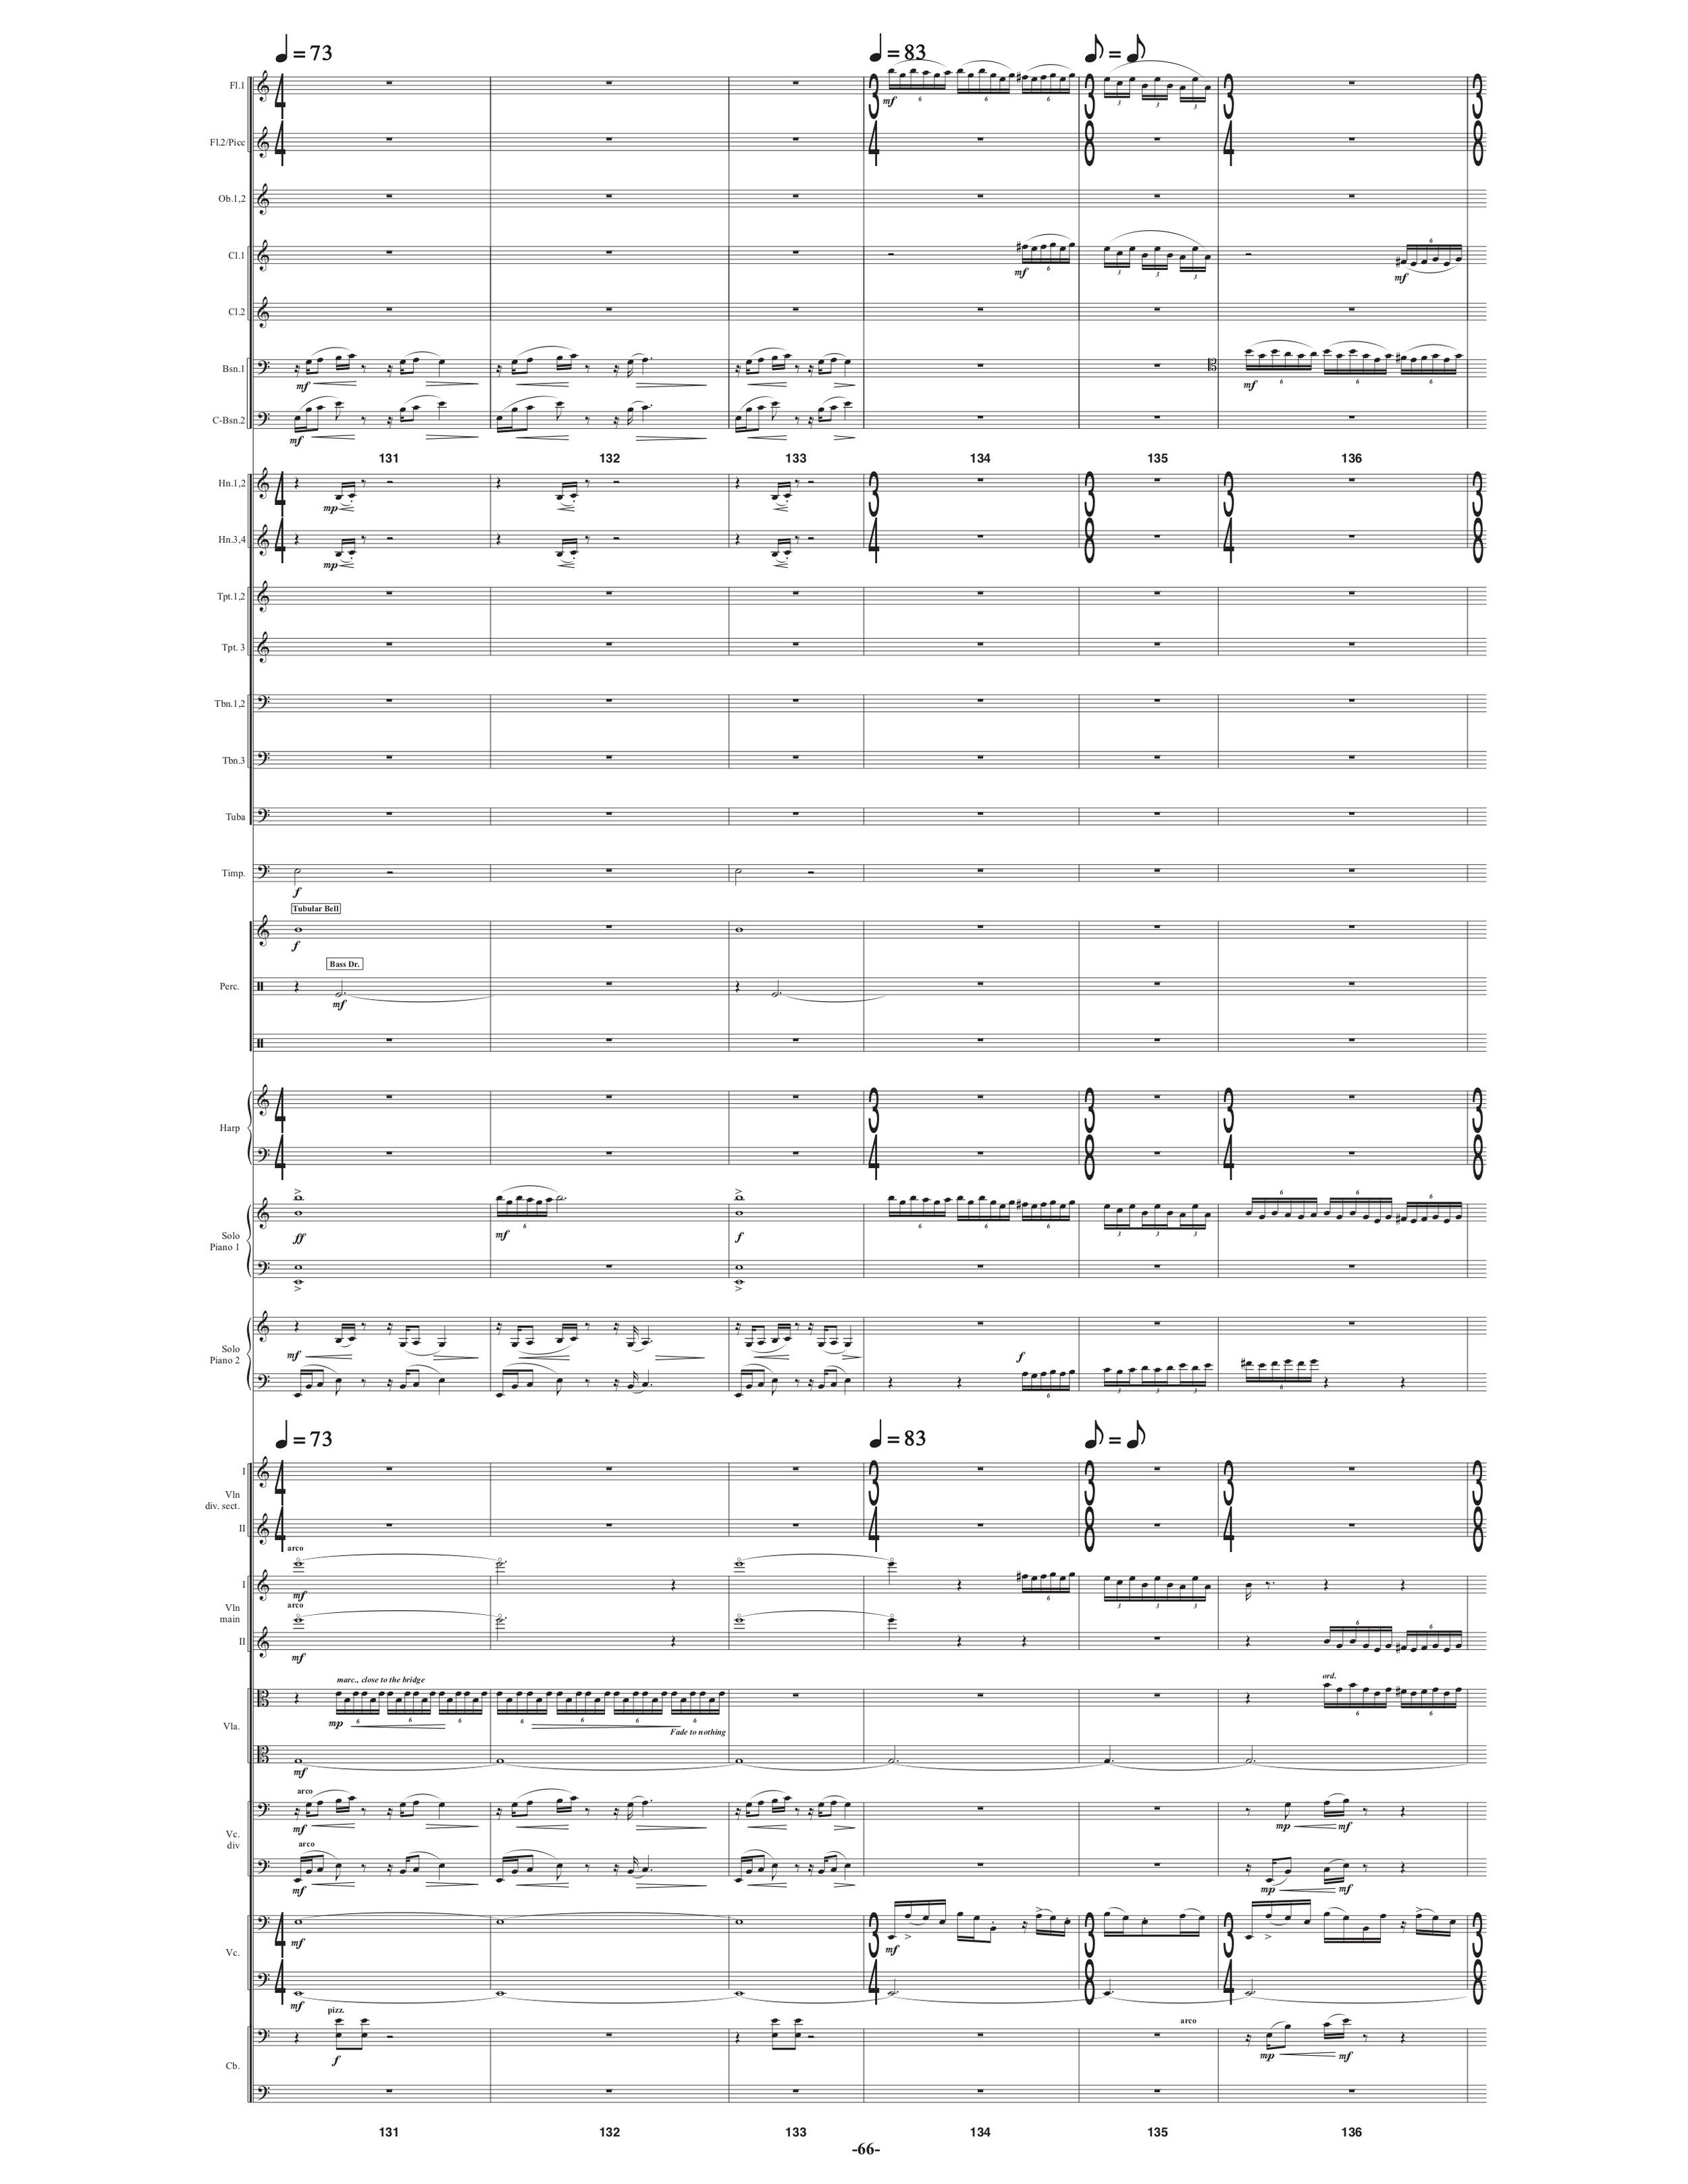 Symphony_Orch & 2 Pianos p71.jpg